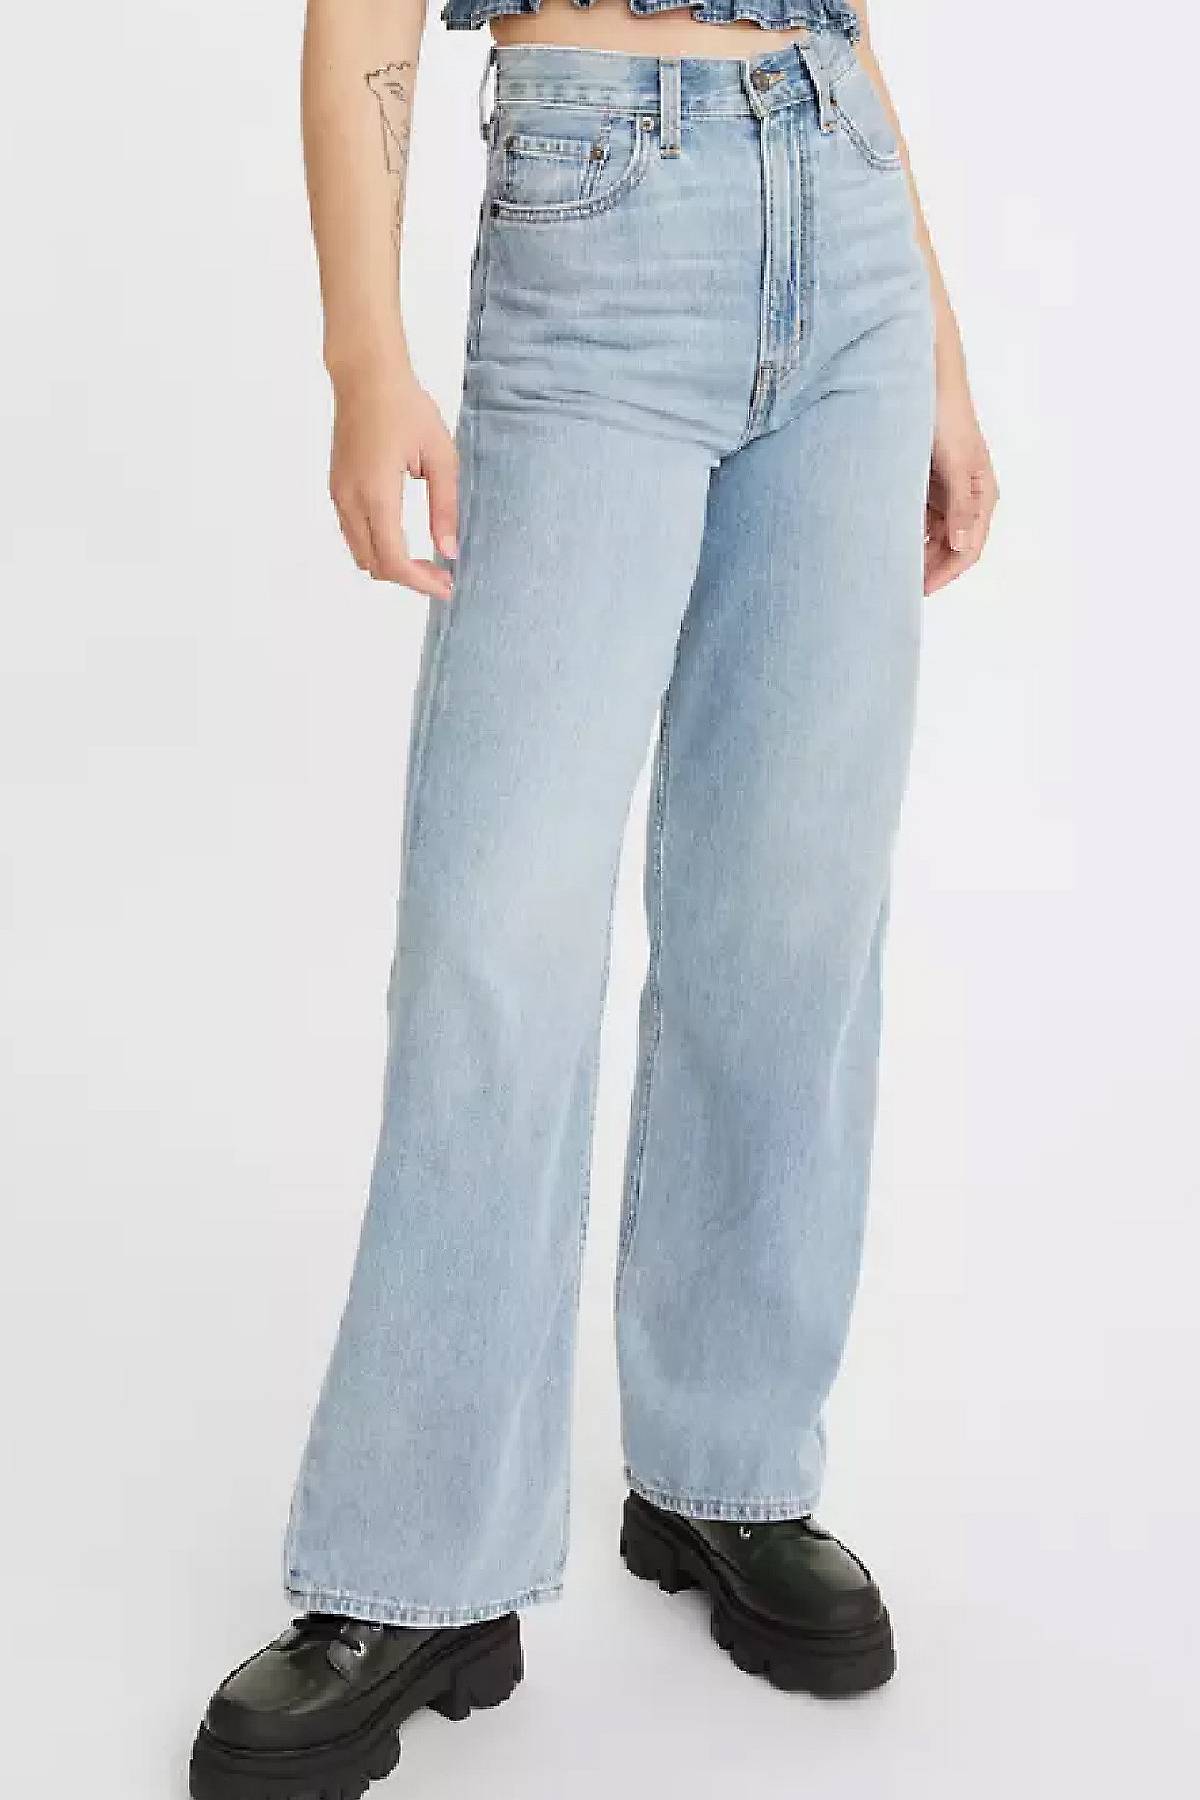 model wearing high loose jeans